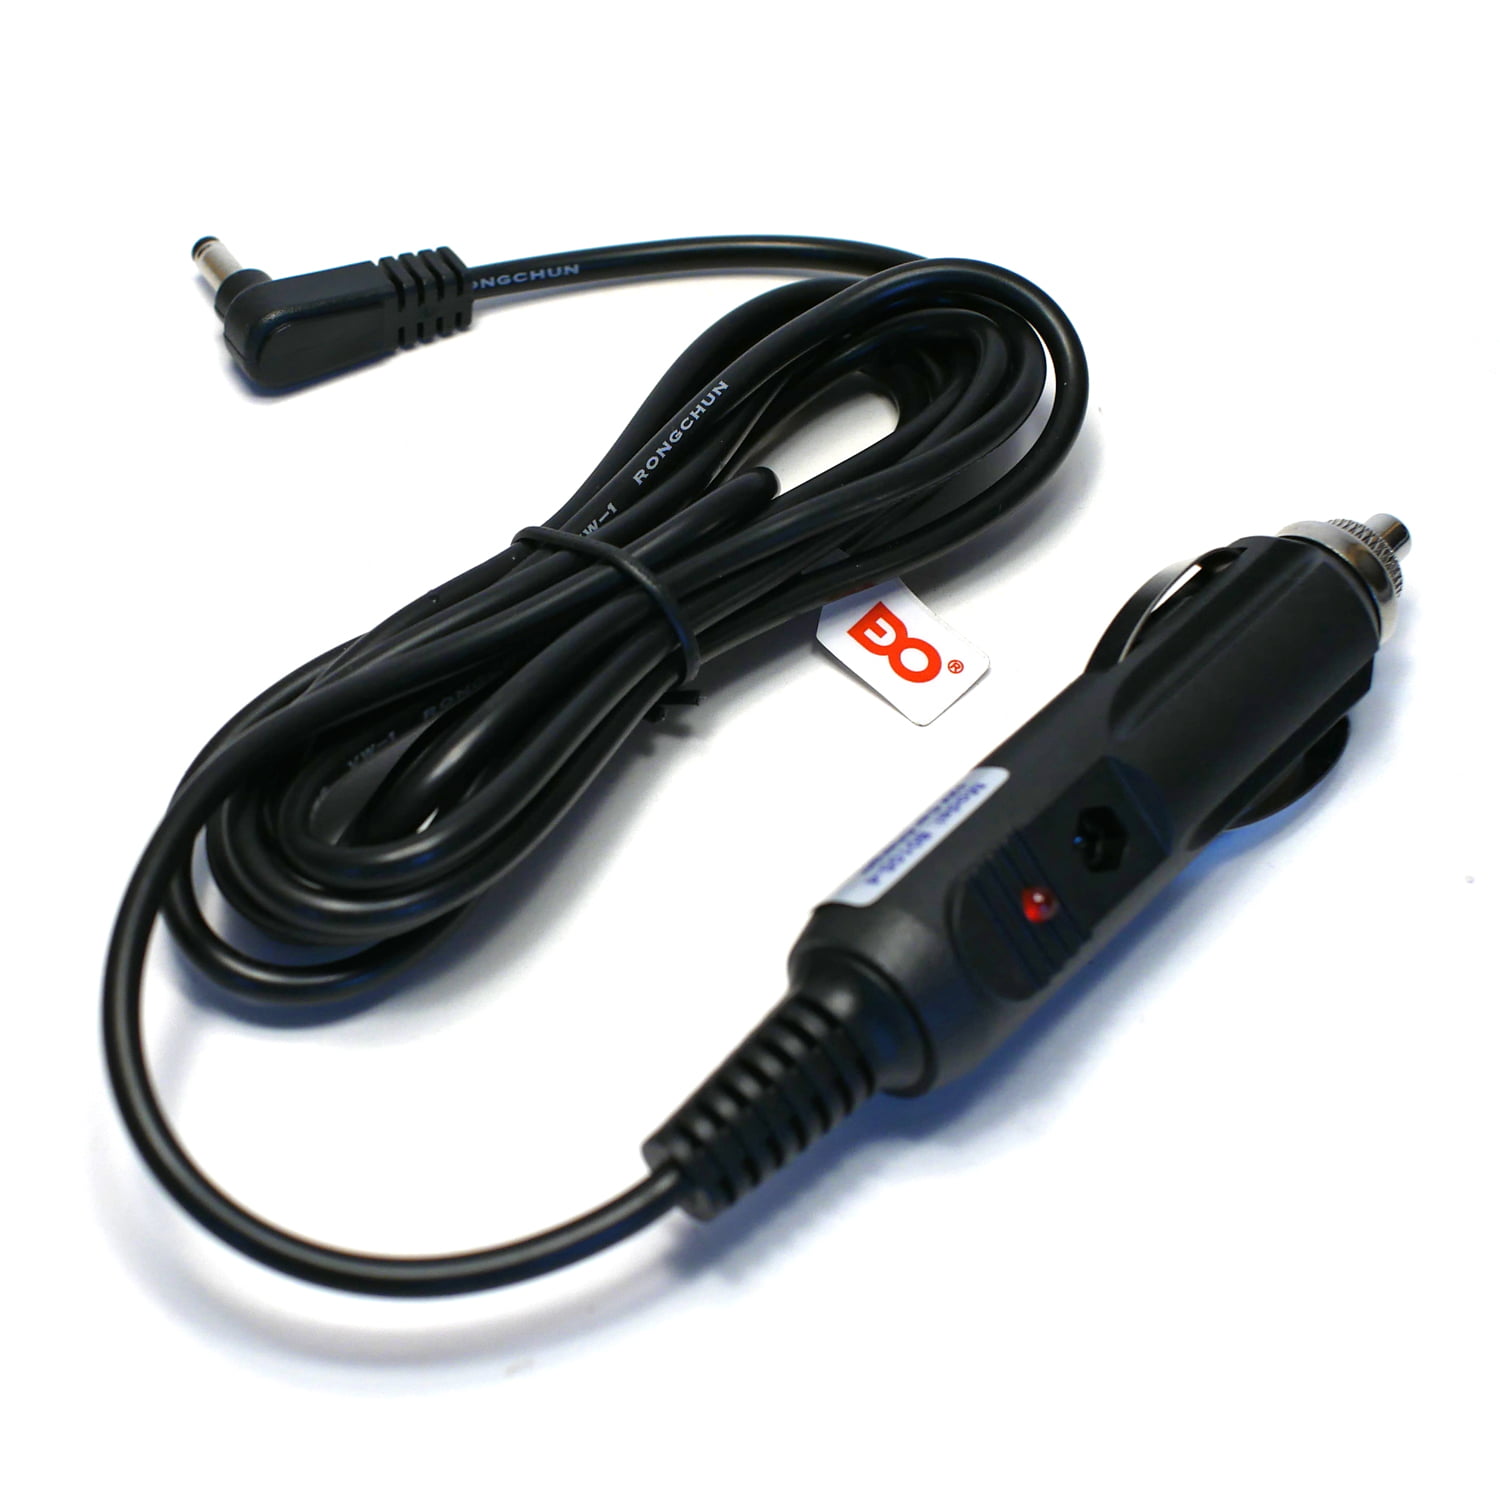 EDO Tech DC Car Charger Adapter Cable Cord for Sylvania Philips Naviskauto  Portable DVD Blu-Ray Player (6.5 ft Long) 